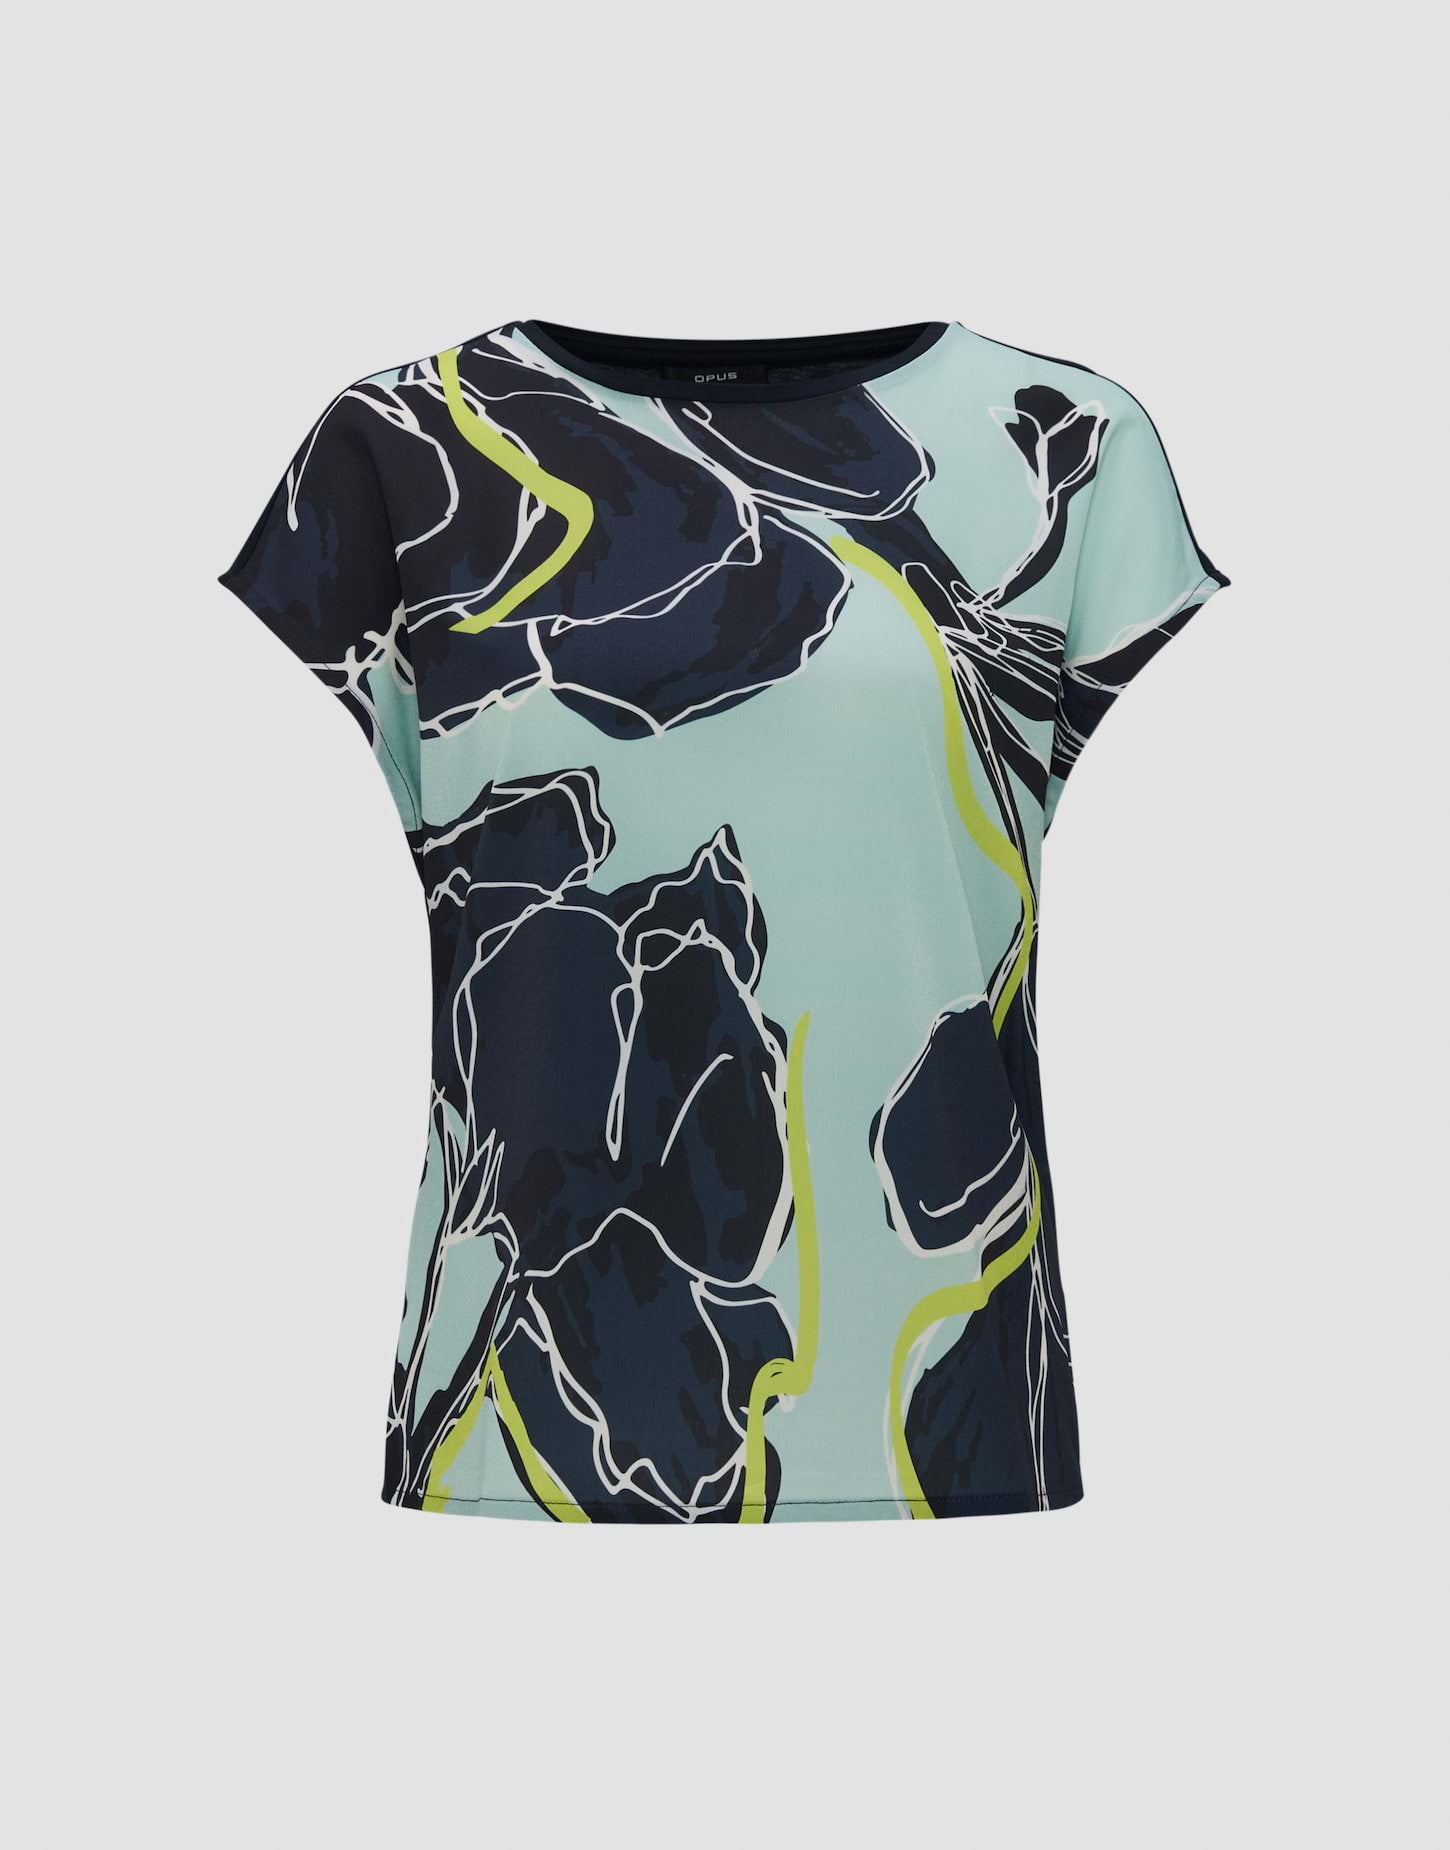 Opus - Sommerliches Shirt mit modernem Print - Stini